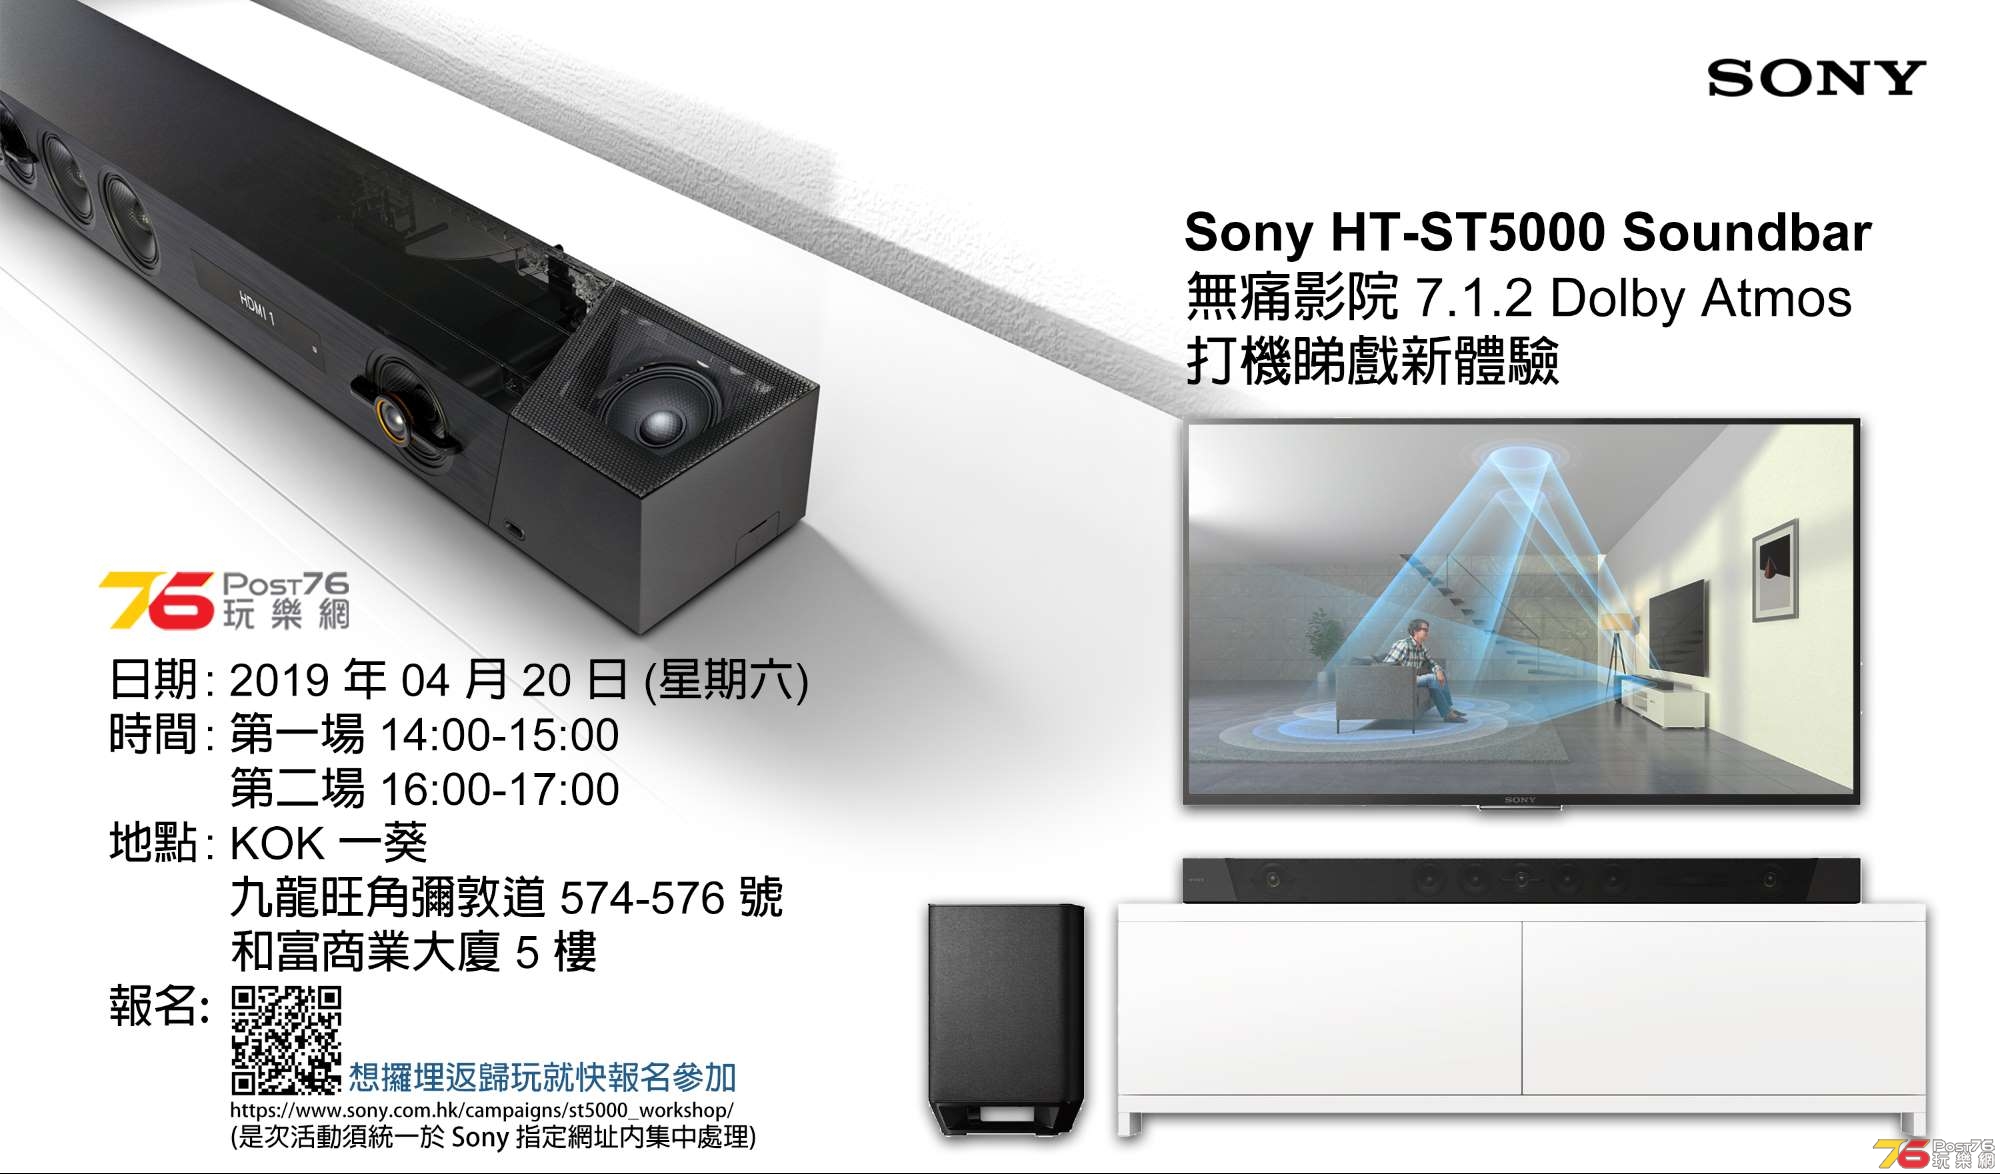 Post76 x Sony HT-ST5000 Soundbar 無痛影院 7.1.2 Dolby Atmos 打機睇戲新新體驗 R1b.jpg